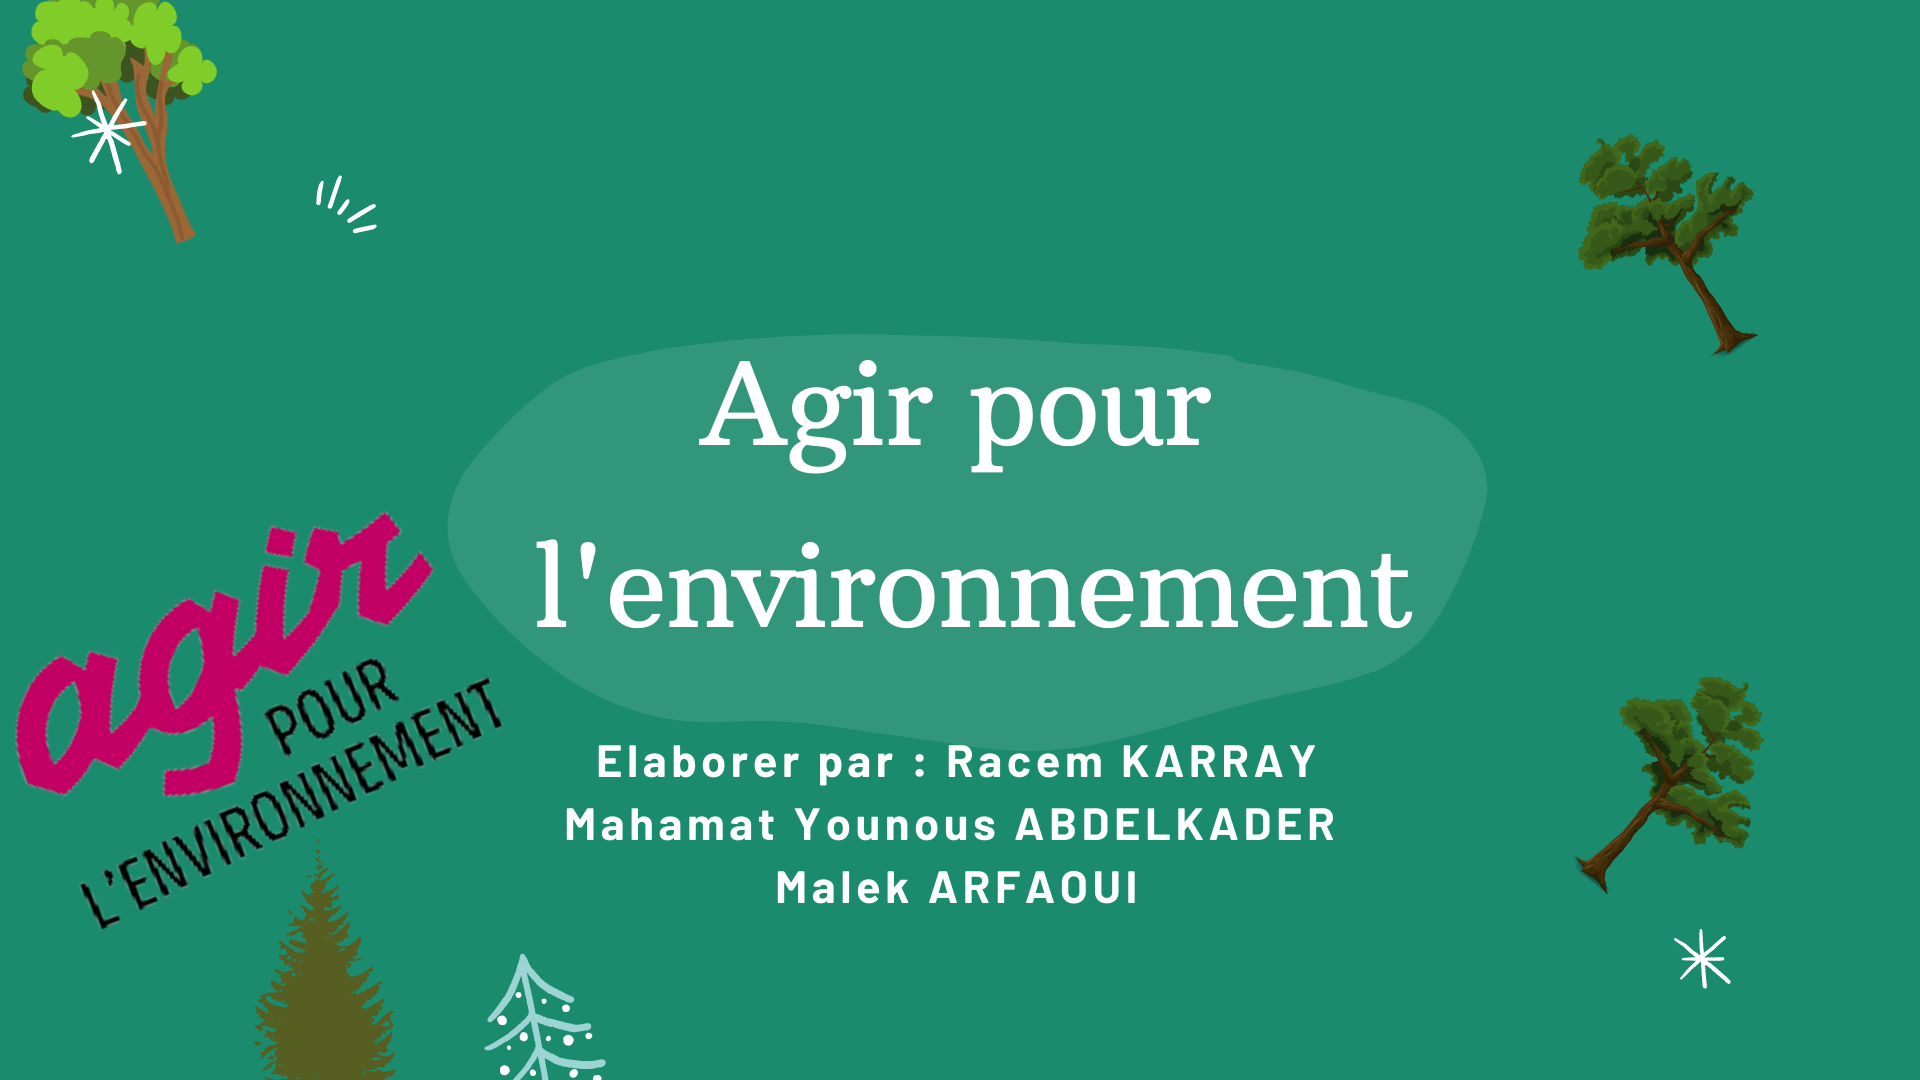 Agir pour
l'environnement

Elaborer par : Racem KARRAY
Mahamat Younous ABDELKADER
Malek ARFAOUI